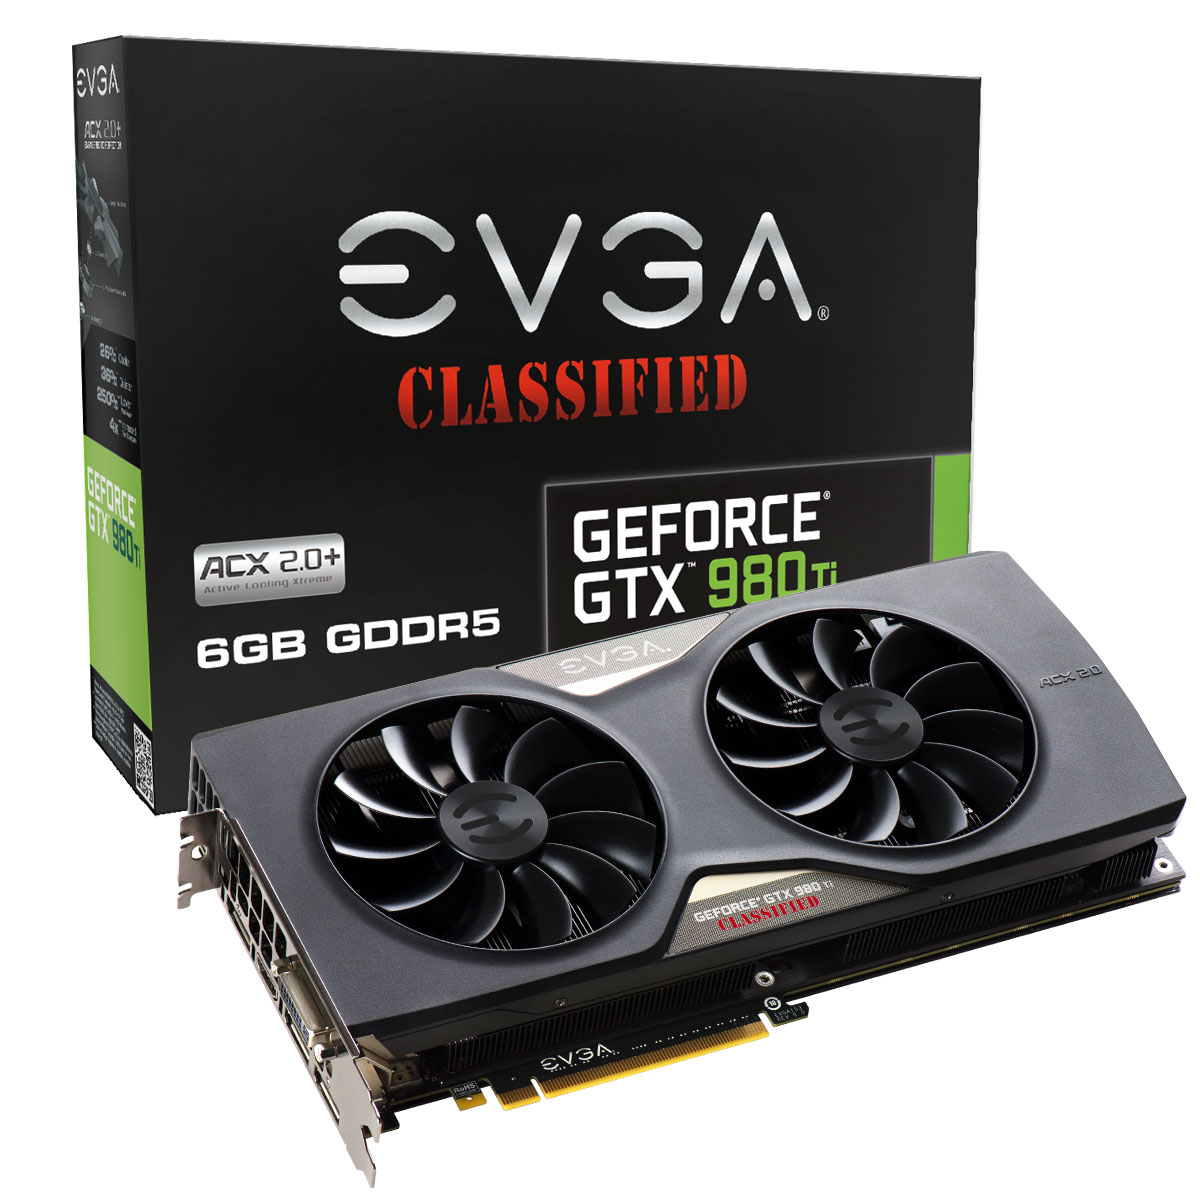 EVGA GeForce GTX 980 Ti Classified ACX 2.0+ announced 34